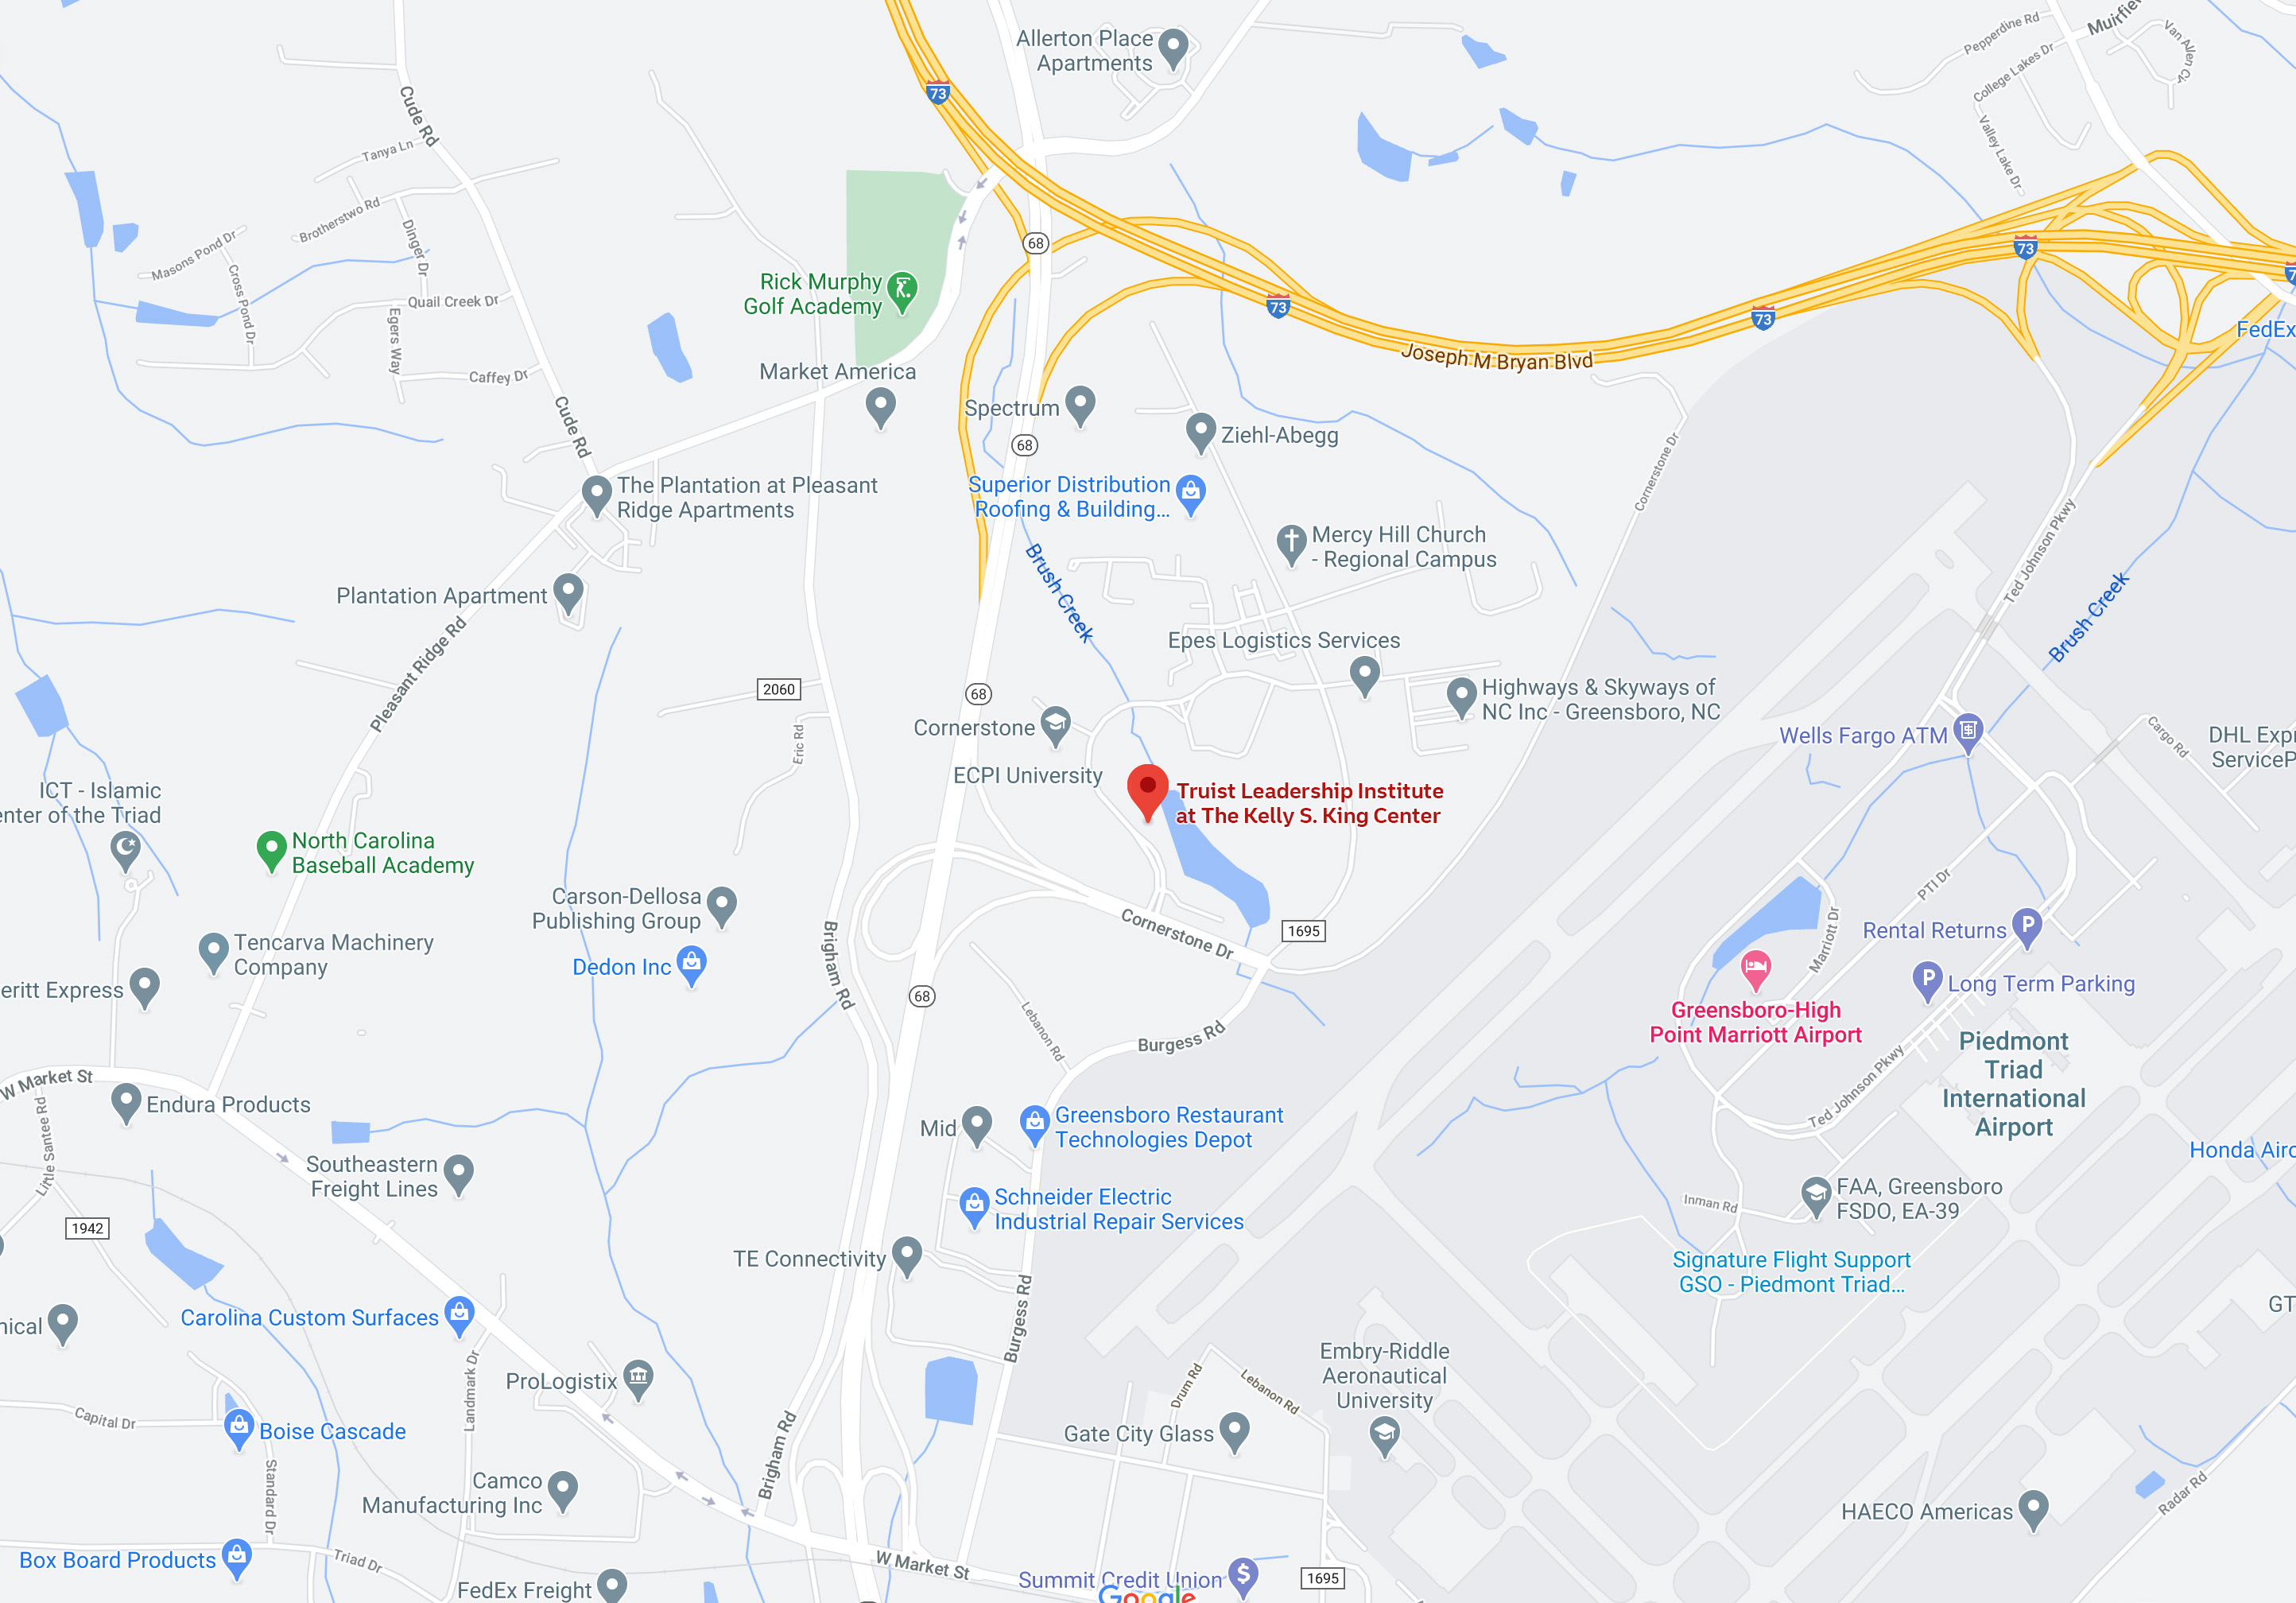 Map of Truist Leadership Institute in Greensboro, North Carolina